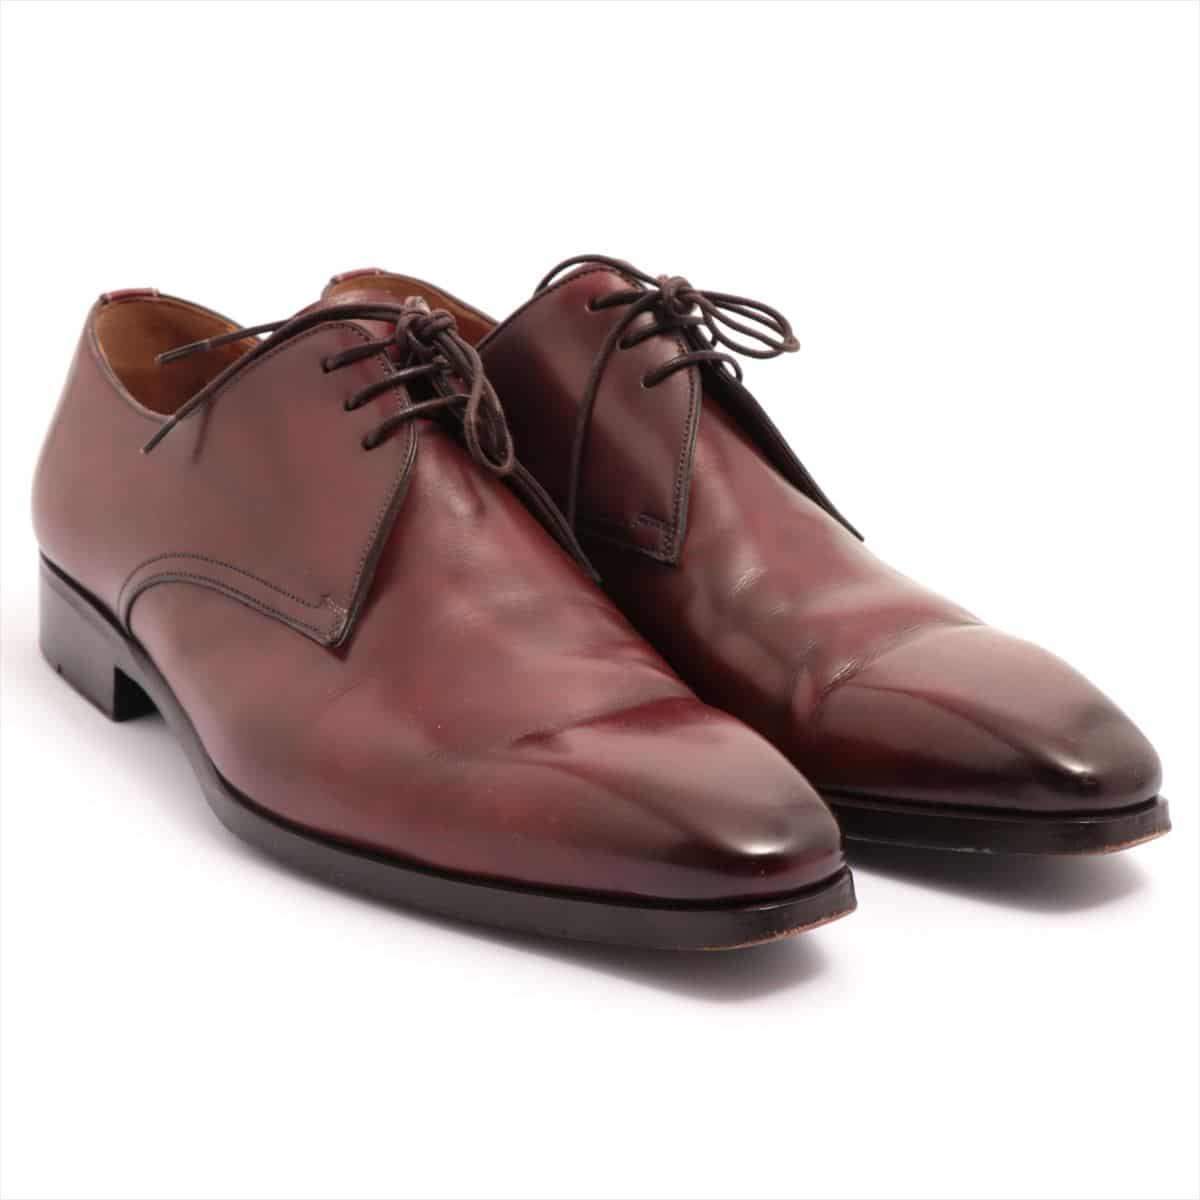 Santoni Leather Leather shoes 6 Men's Brown 7645